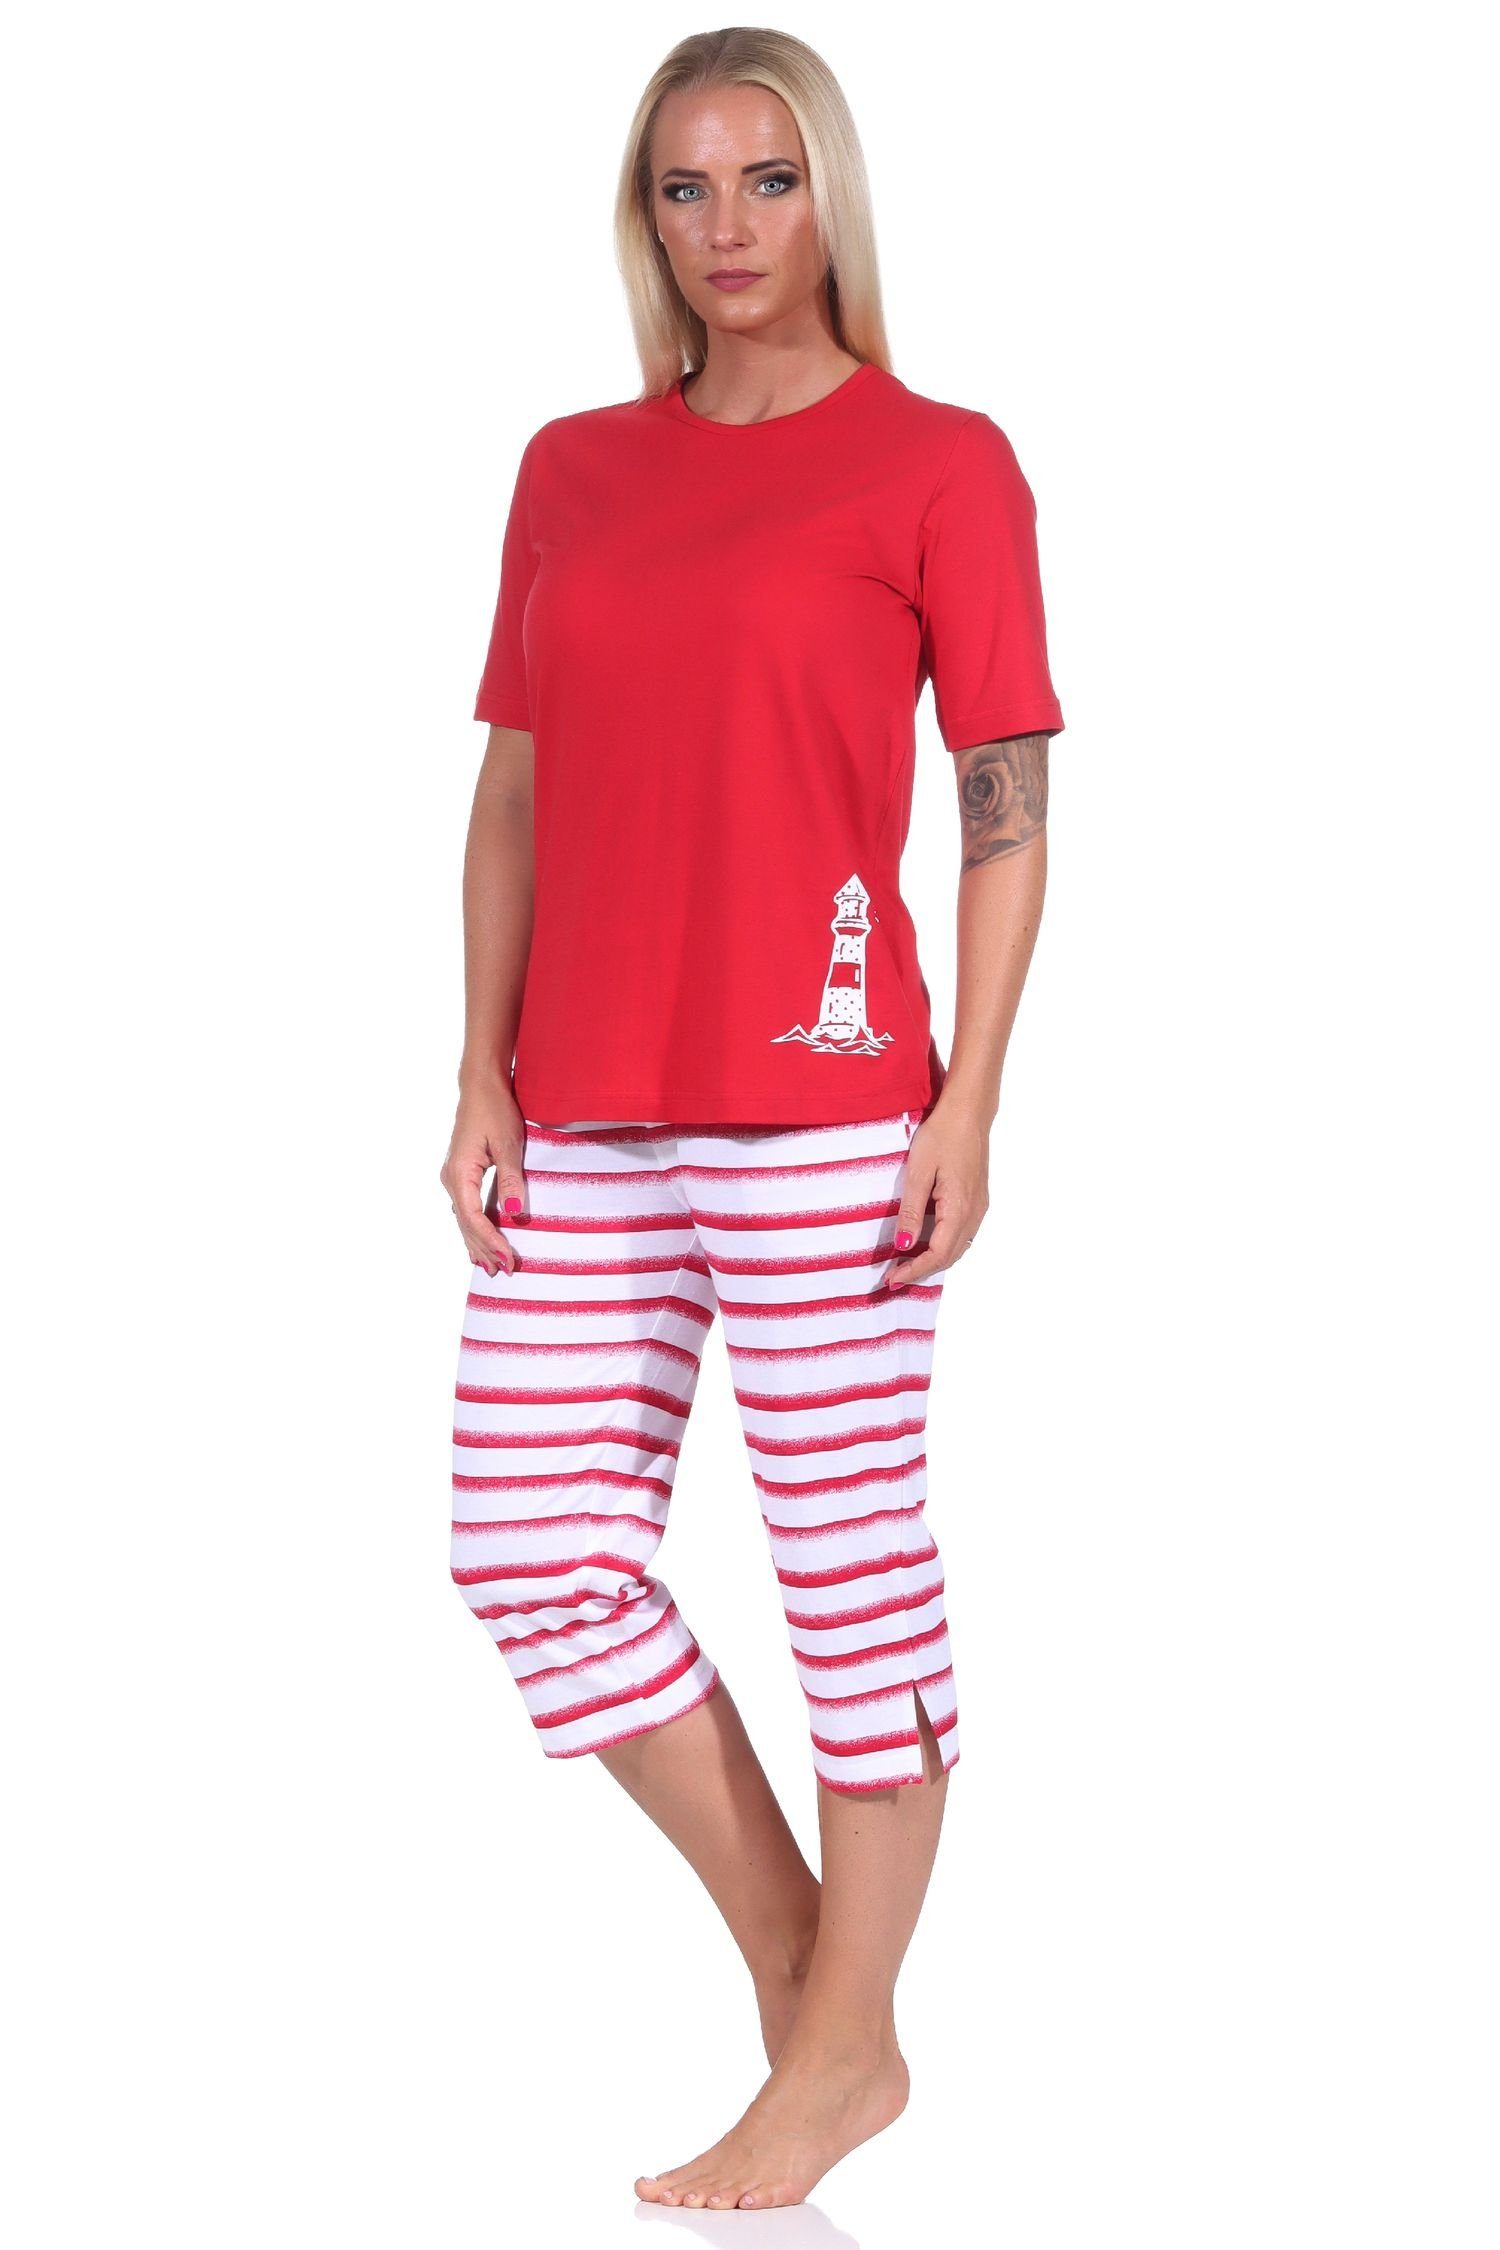 Damen Motiv kurzarm Leuchtturm rot Capri mit Maritimer Top Schlafanzug, Normann Pyjama